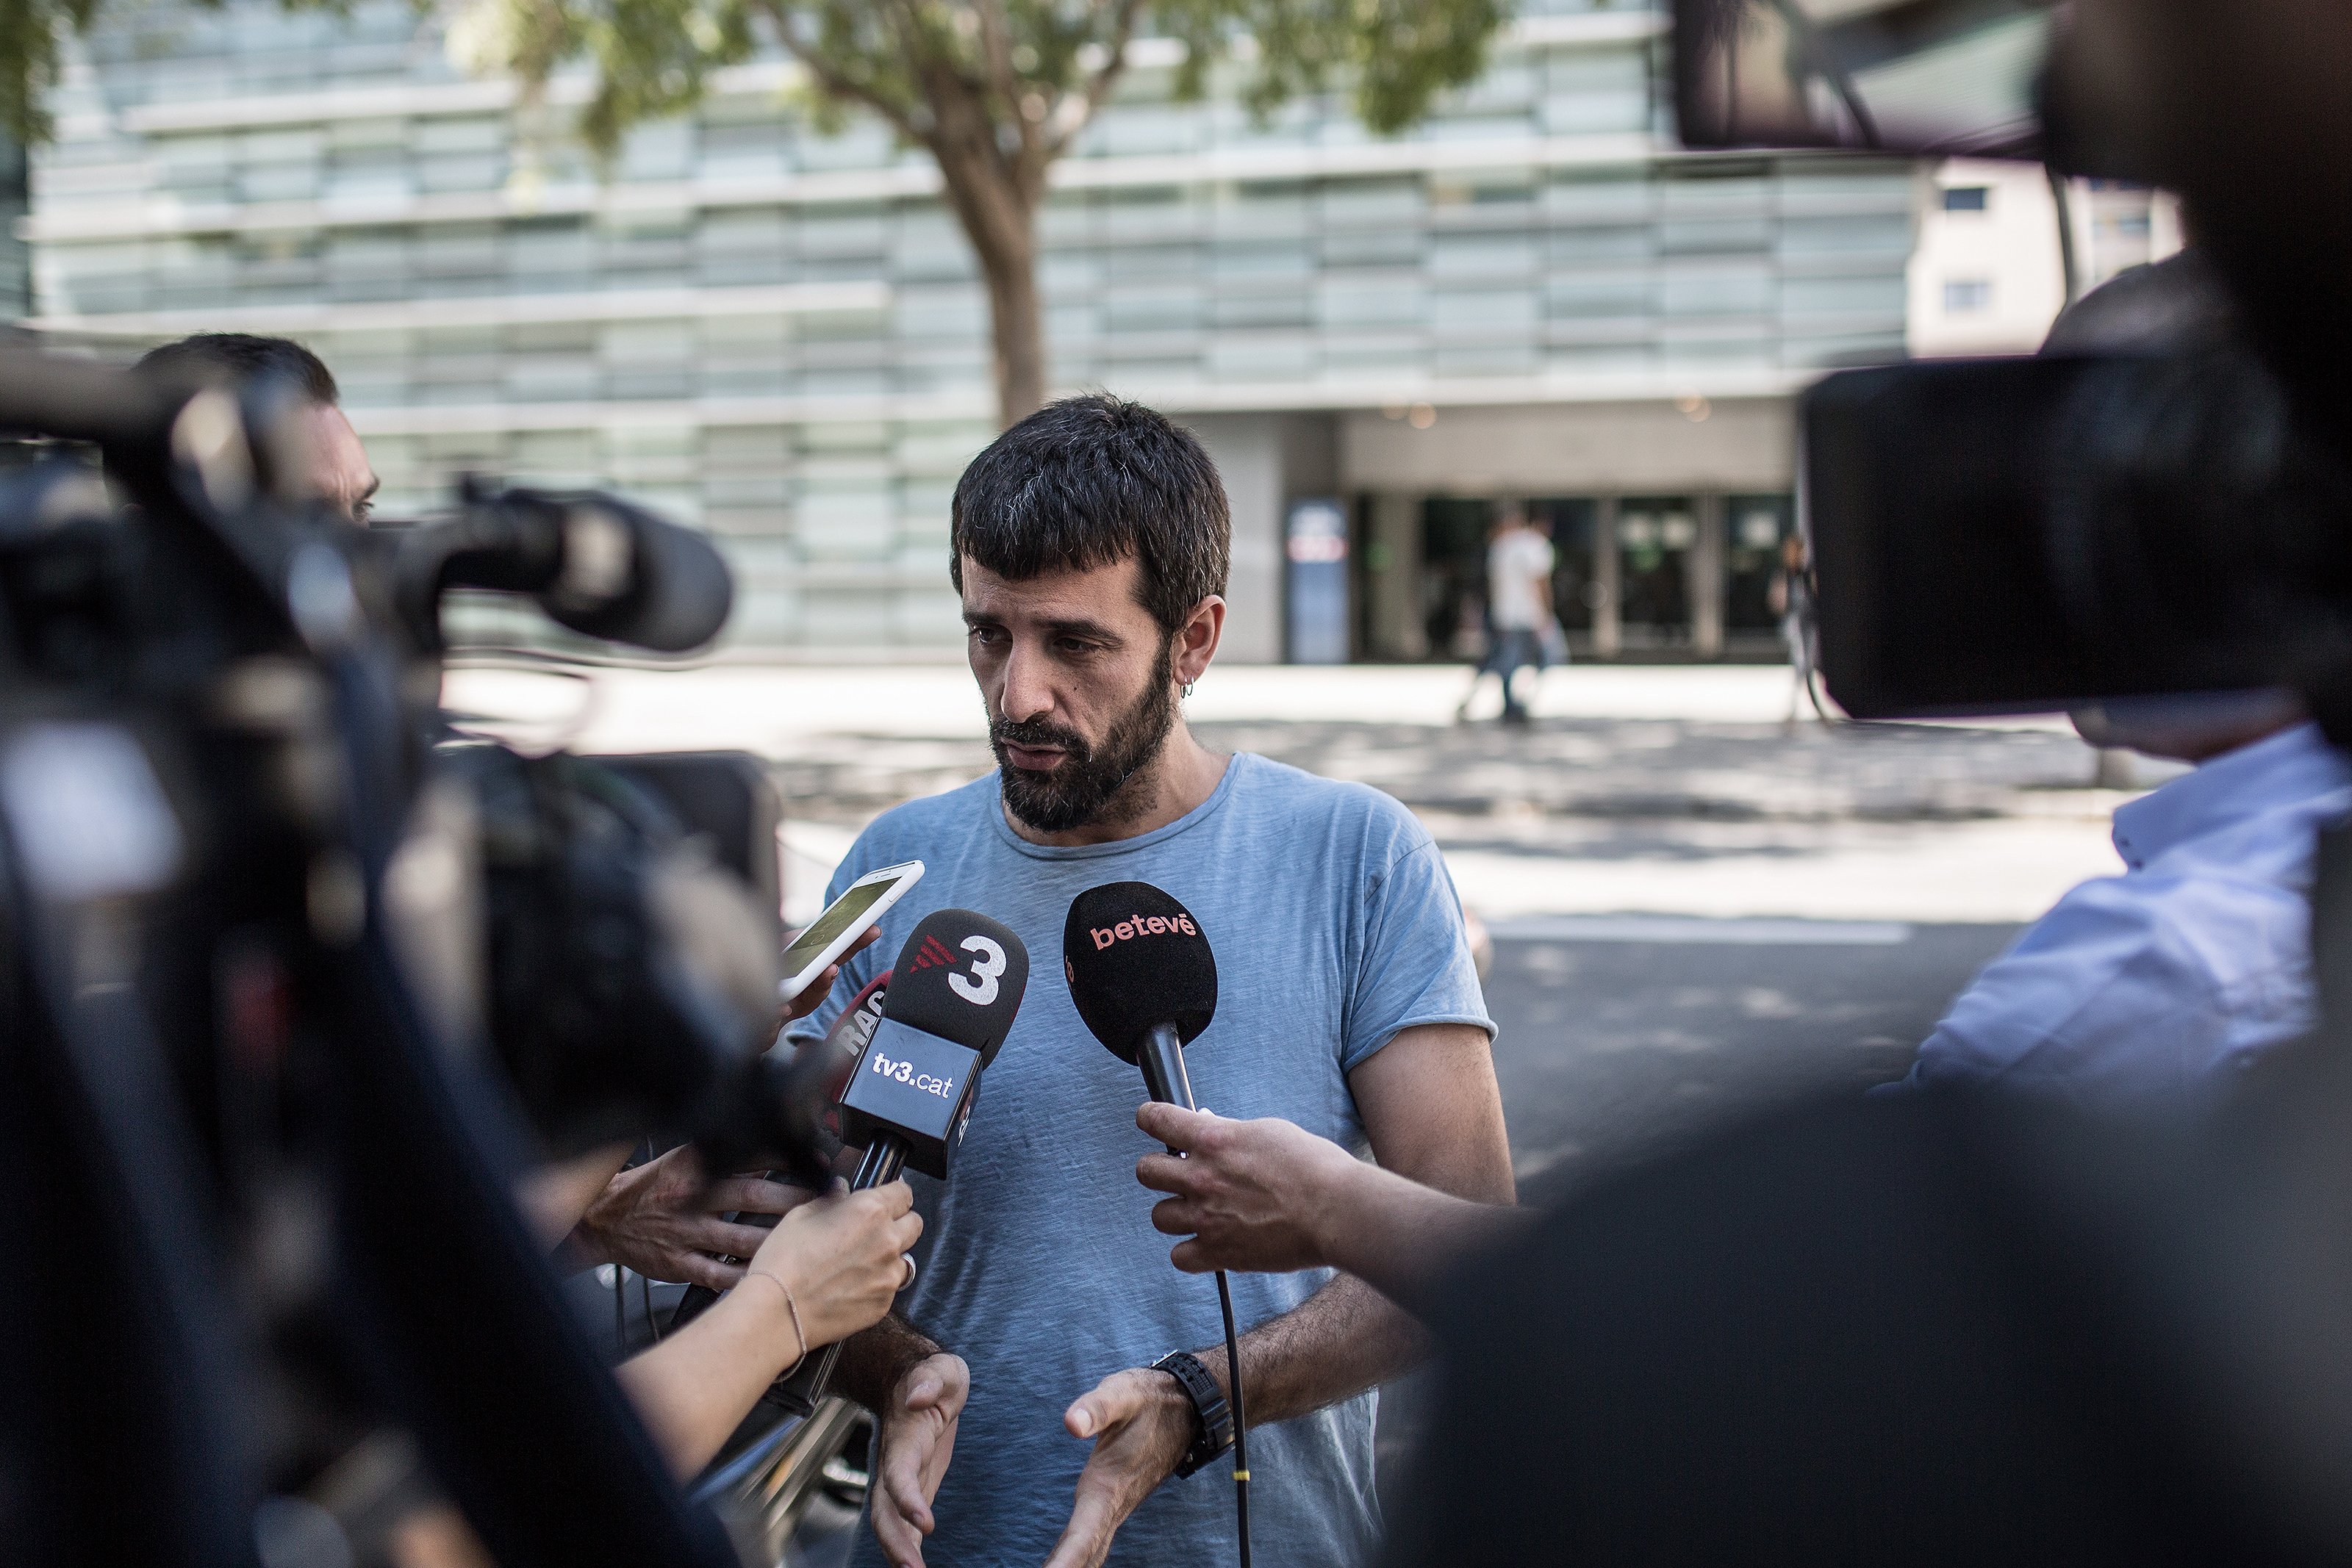 jordi borras declaracio comissaria les corts barcelona agresio feixista (bona qualitat) - Carles Palacio